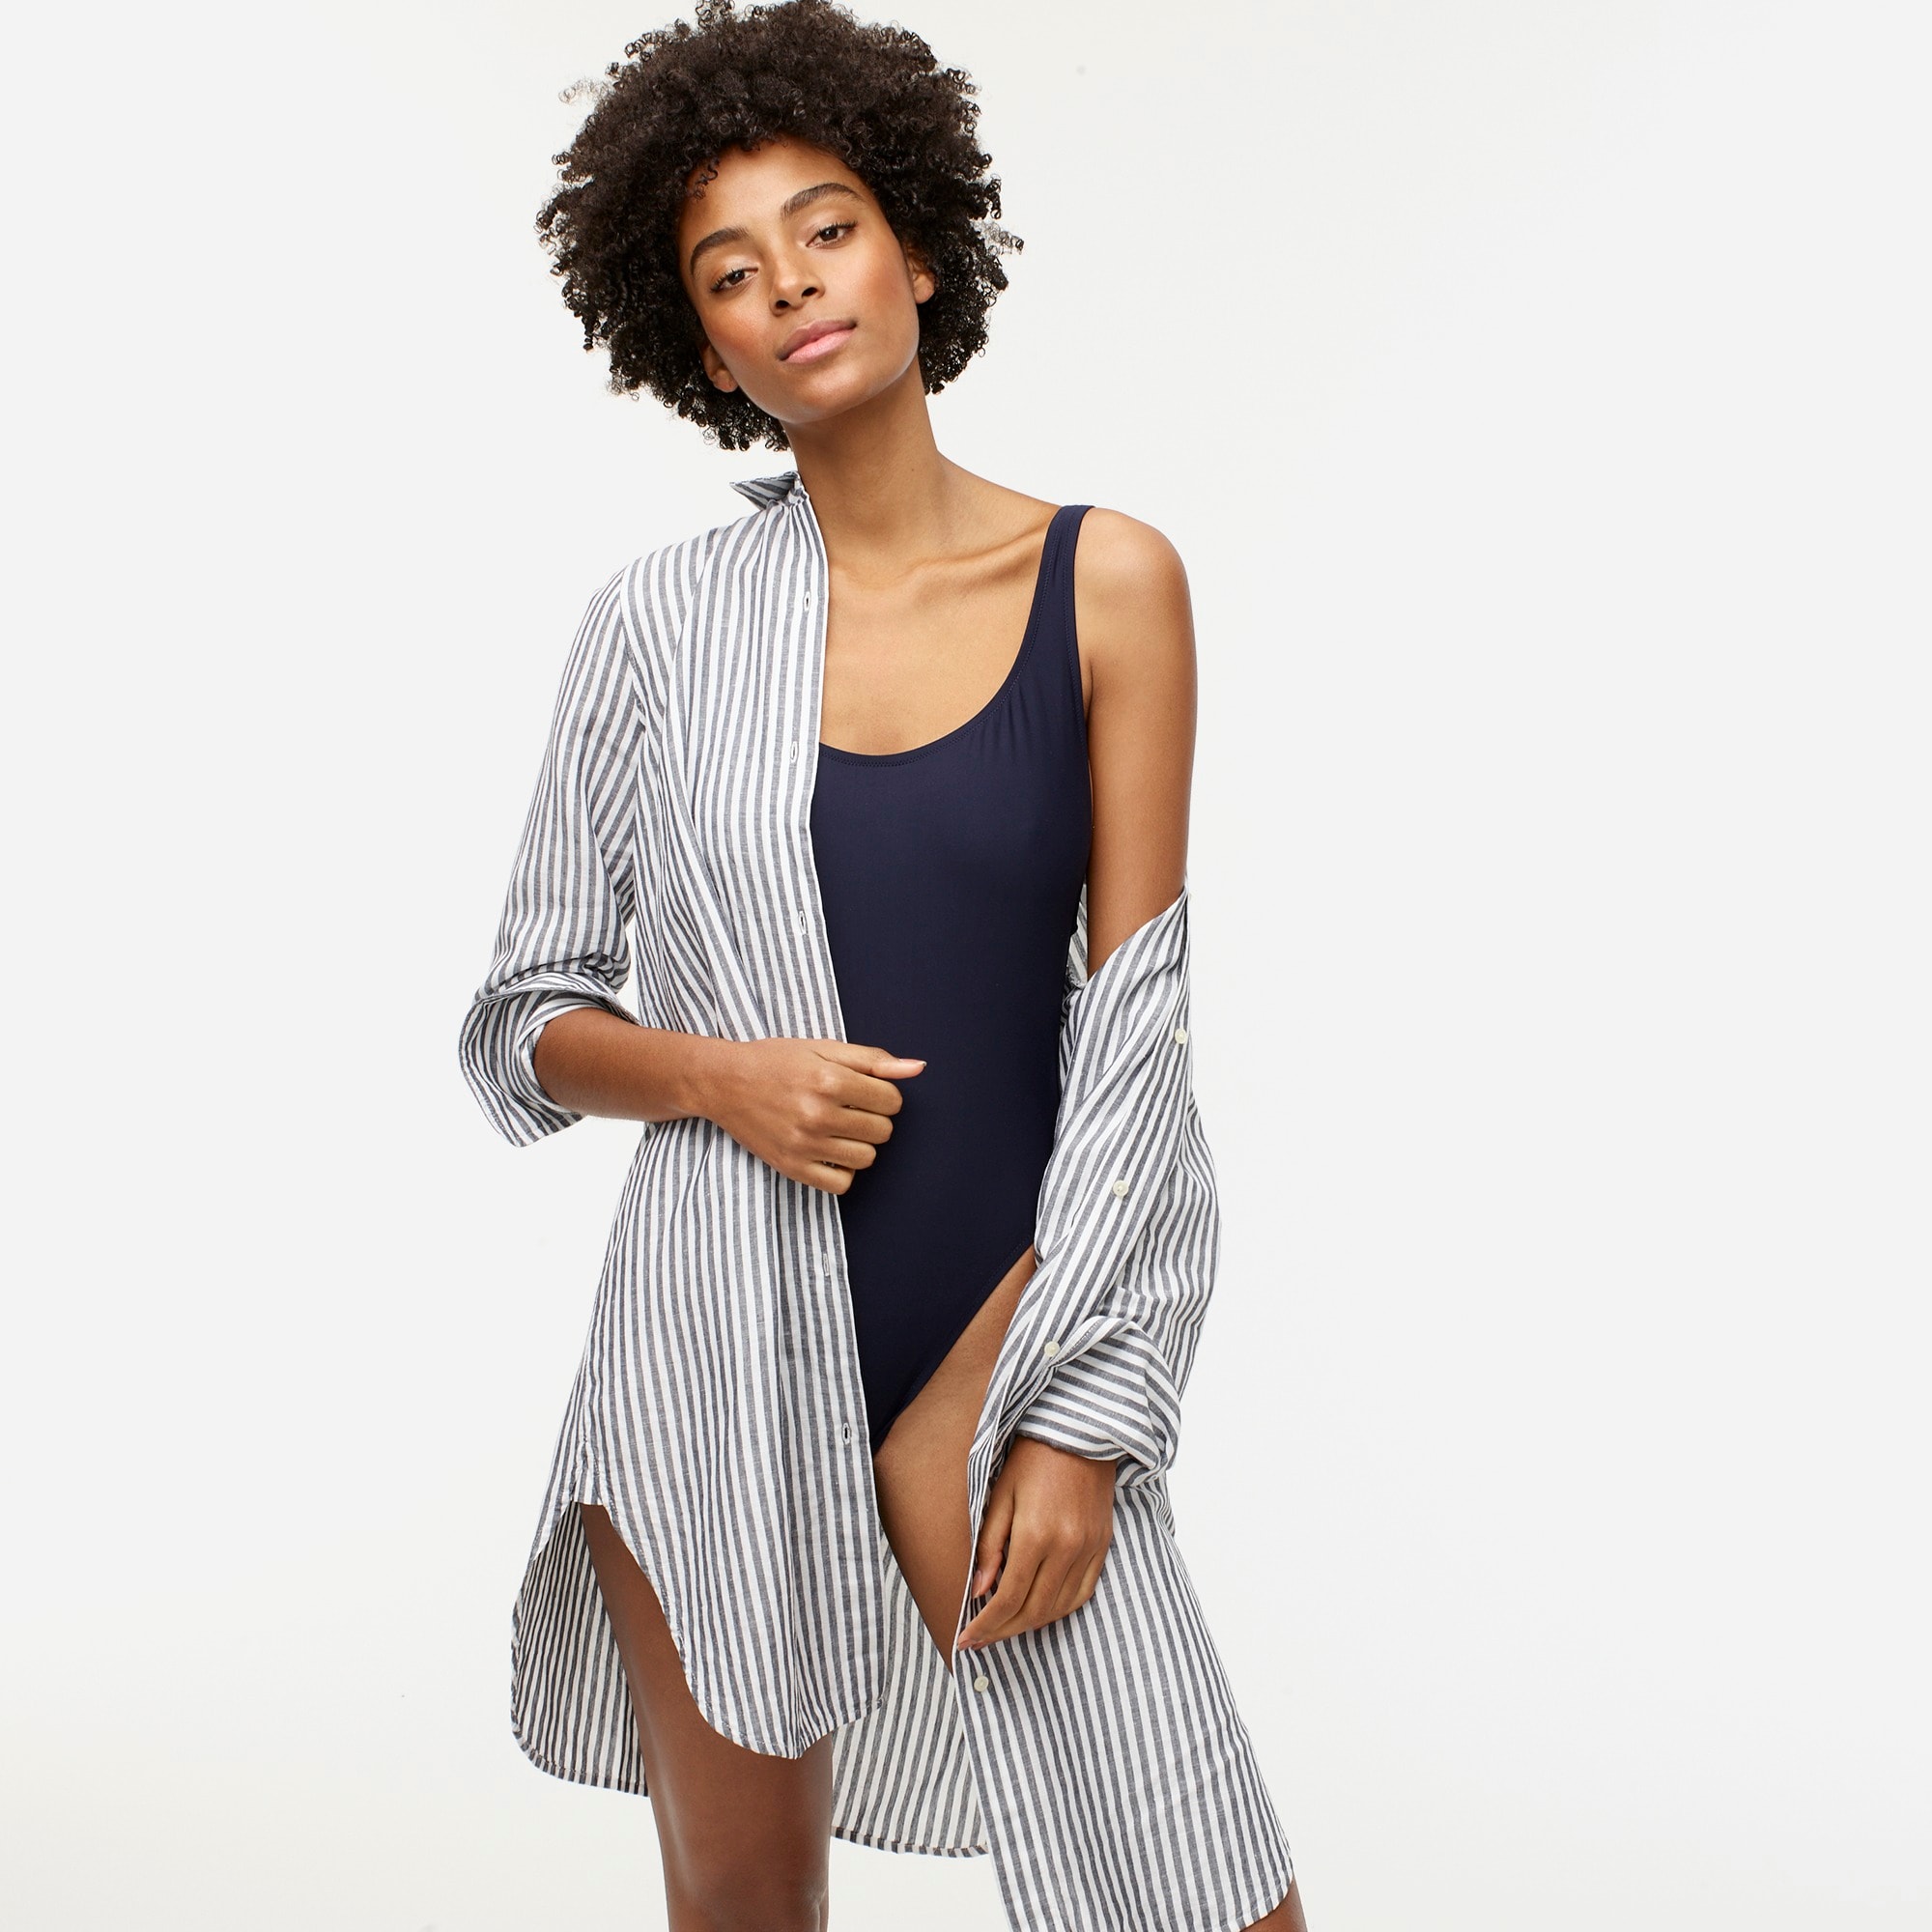 womens Classic-fit beach shirt in striped linen-cotton blend